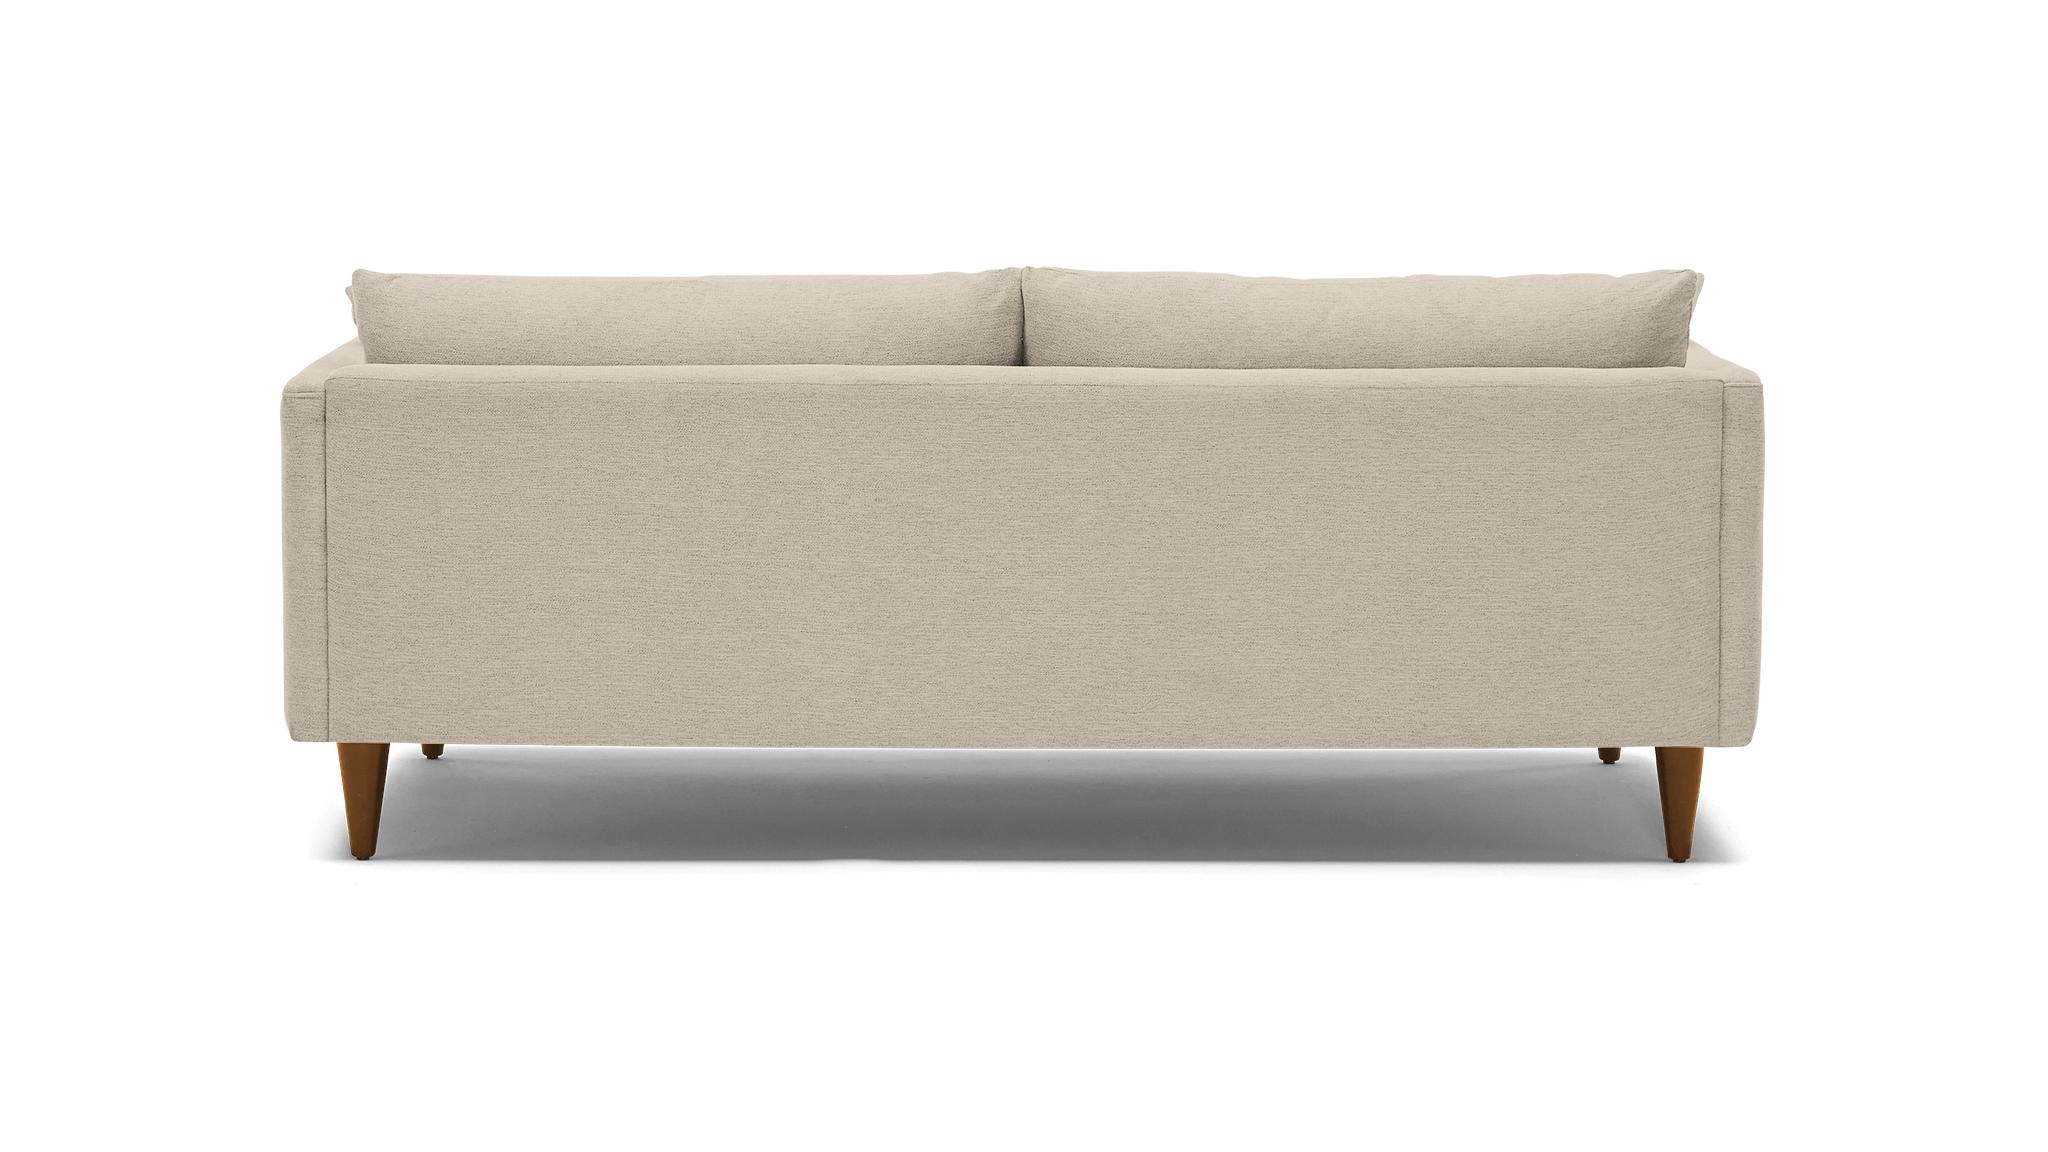 Beige/White Lewis Mid Century Modern Sofa - Cody Sandstone - Mocha - Cone - Image 4